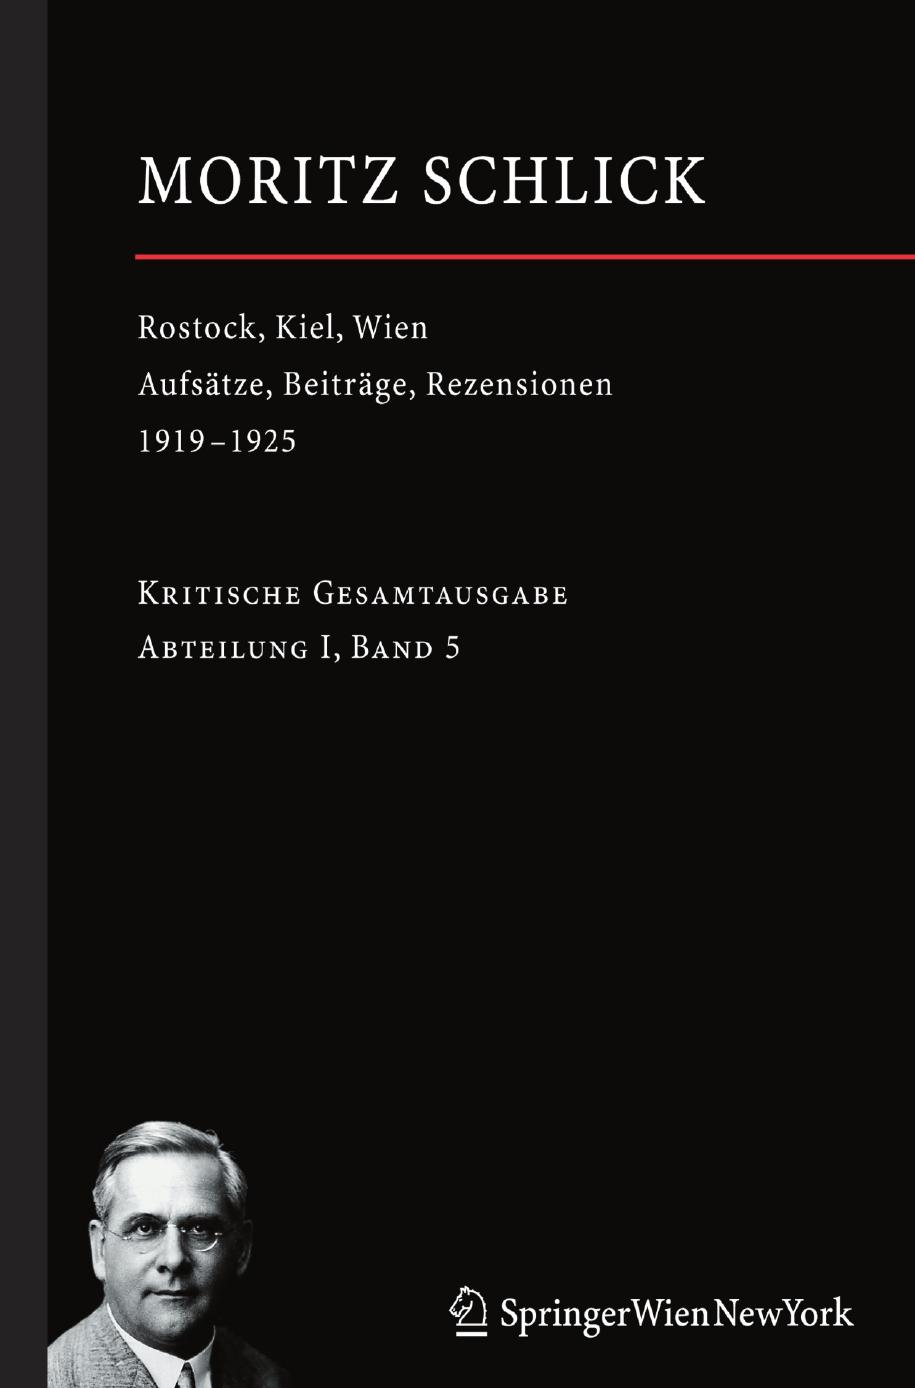 Rostock, Kiel, Wien: Aufsätze, Beiträge, Rezensionen 1919-1925